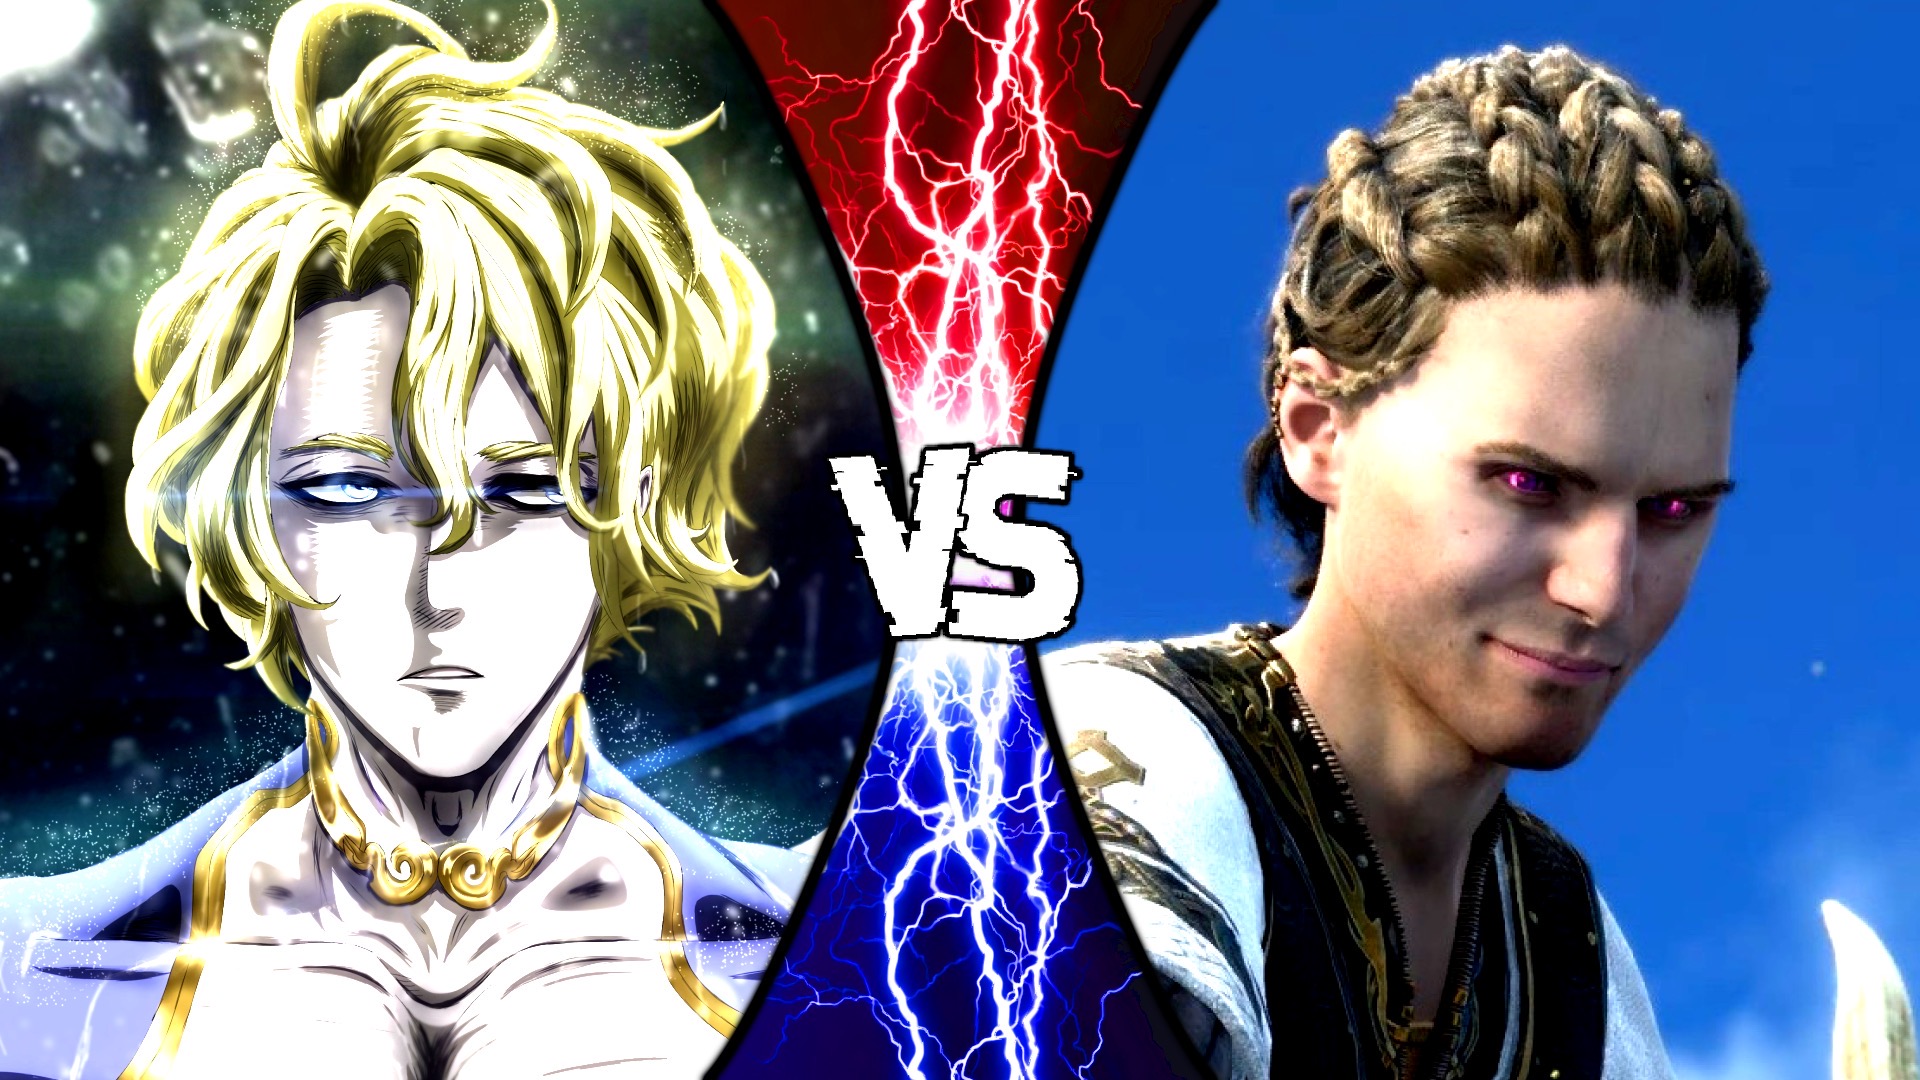 Who would win, Poseidon or Heimdall God of War? - Quora